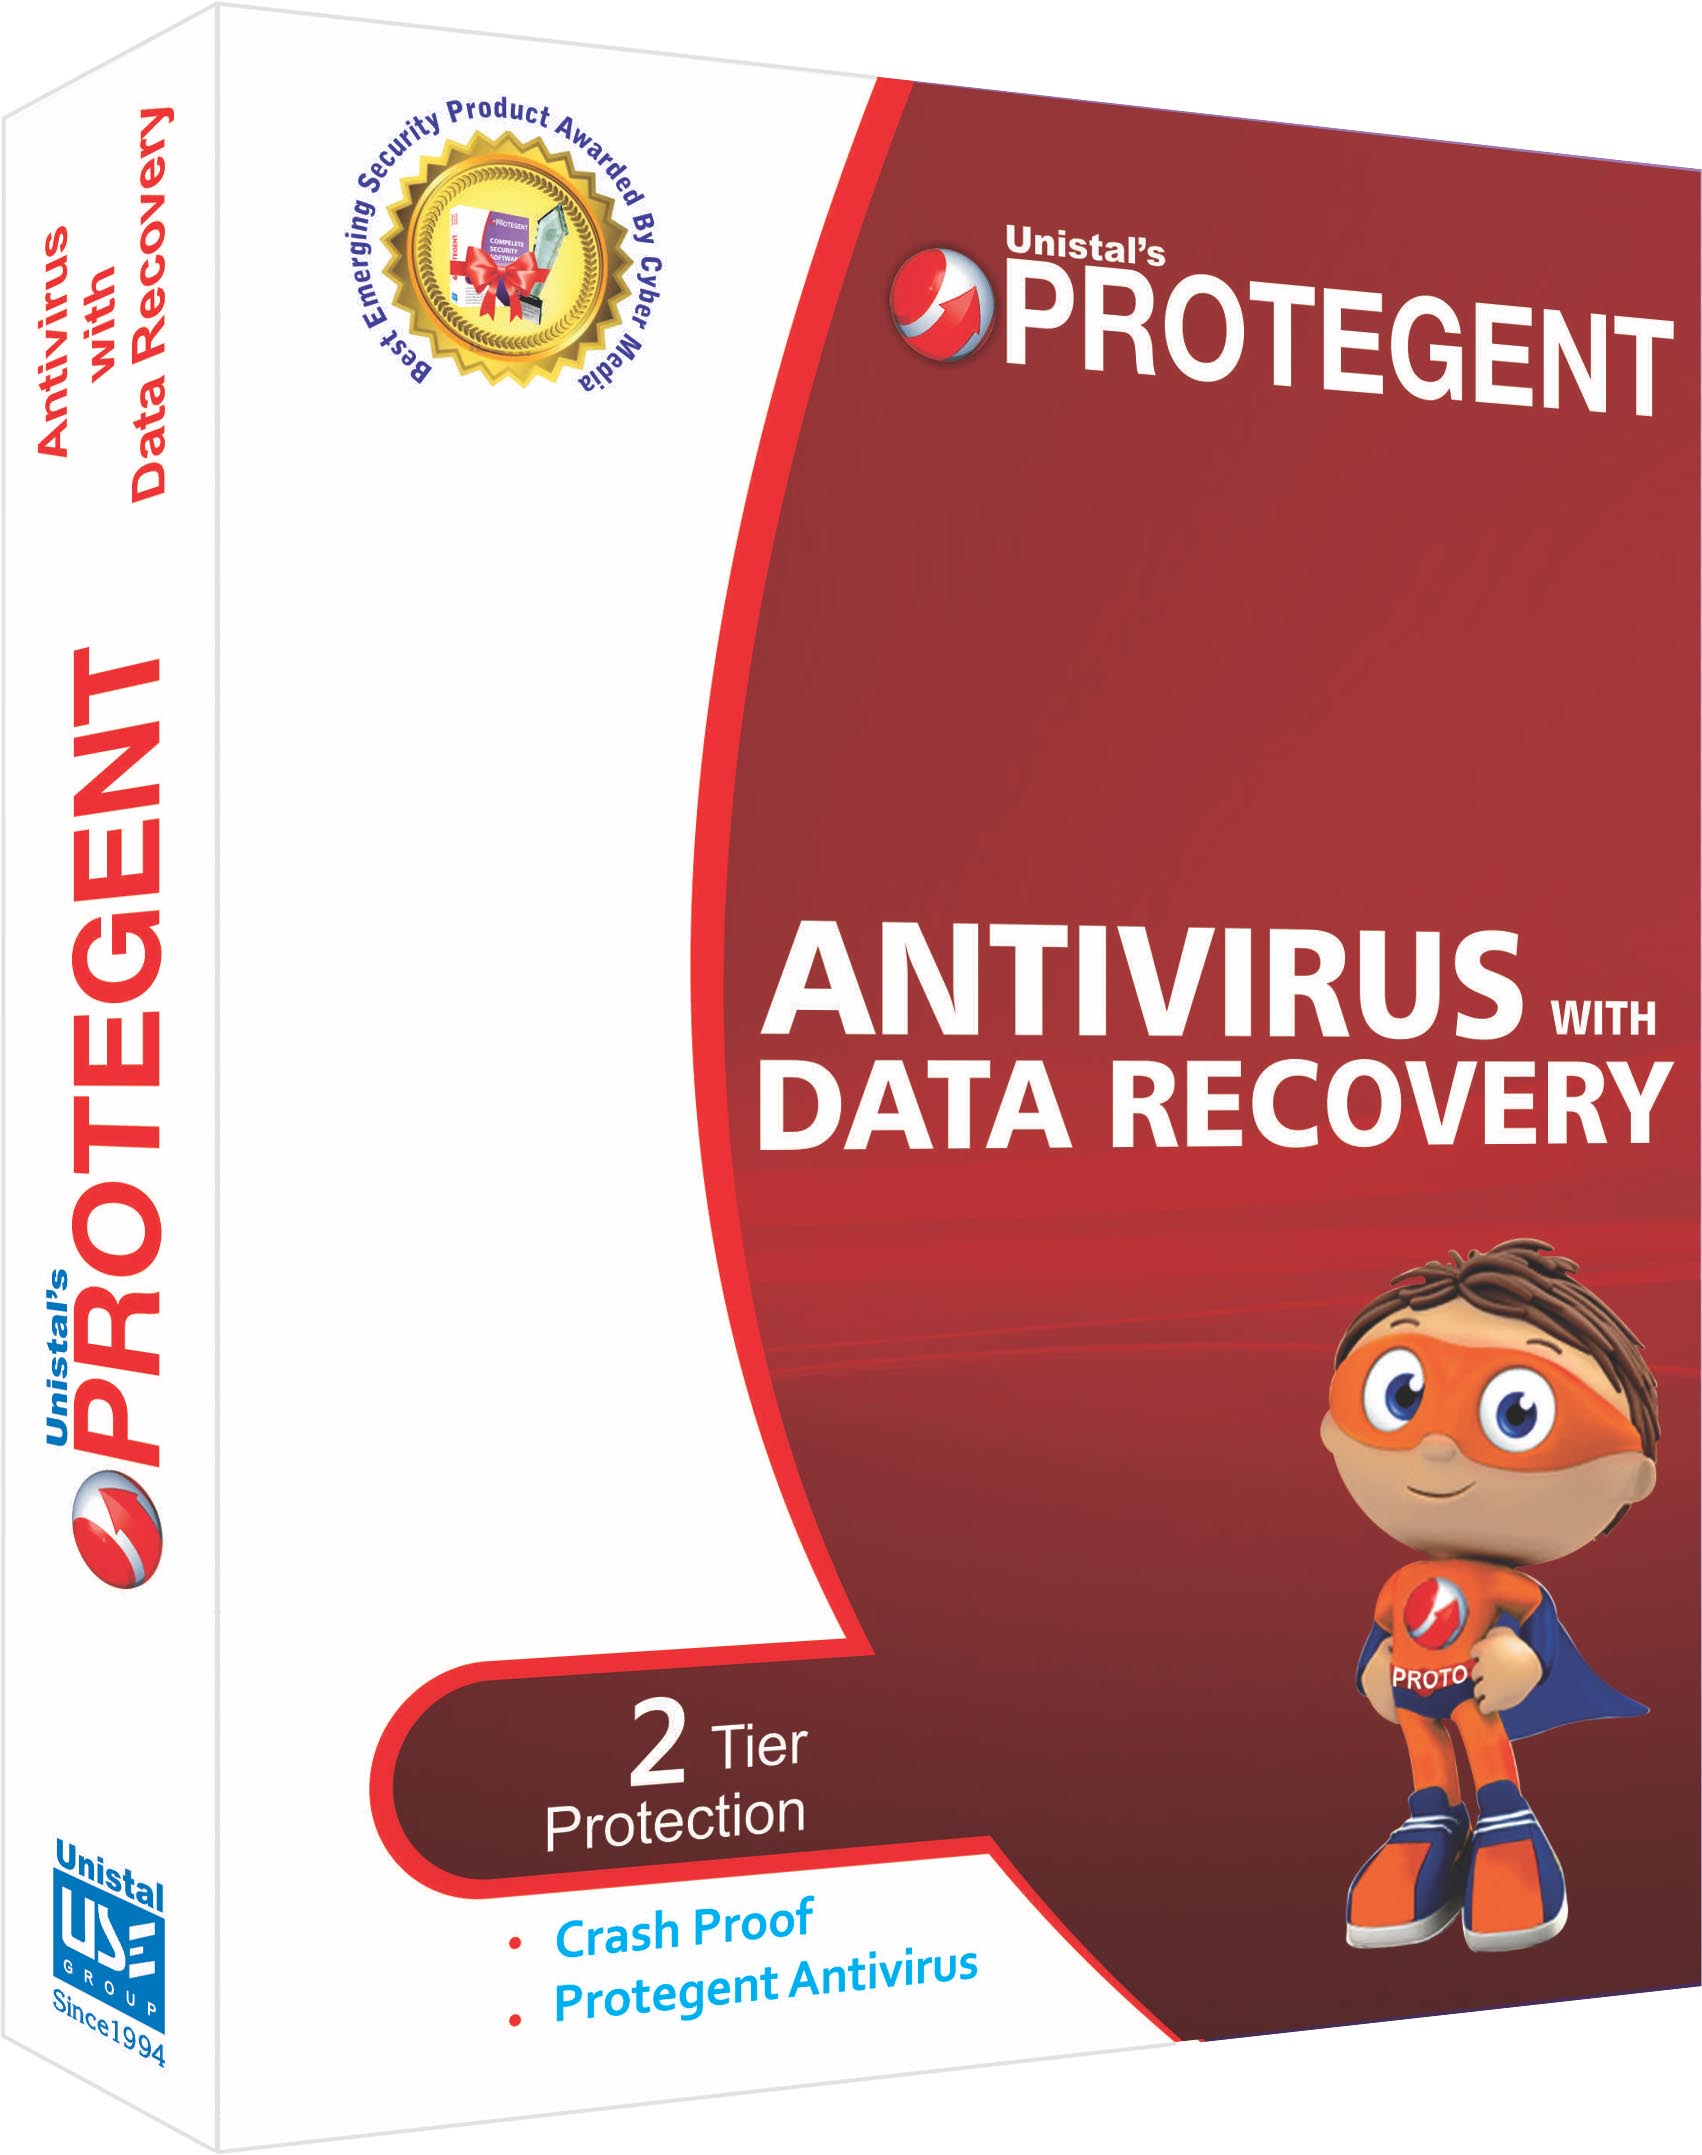 Protegent Antivirus Software,Delhi 